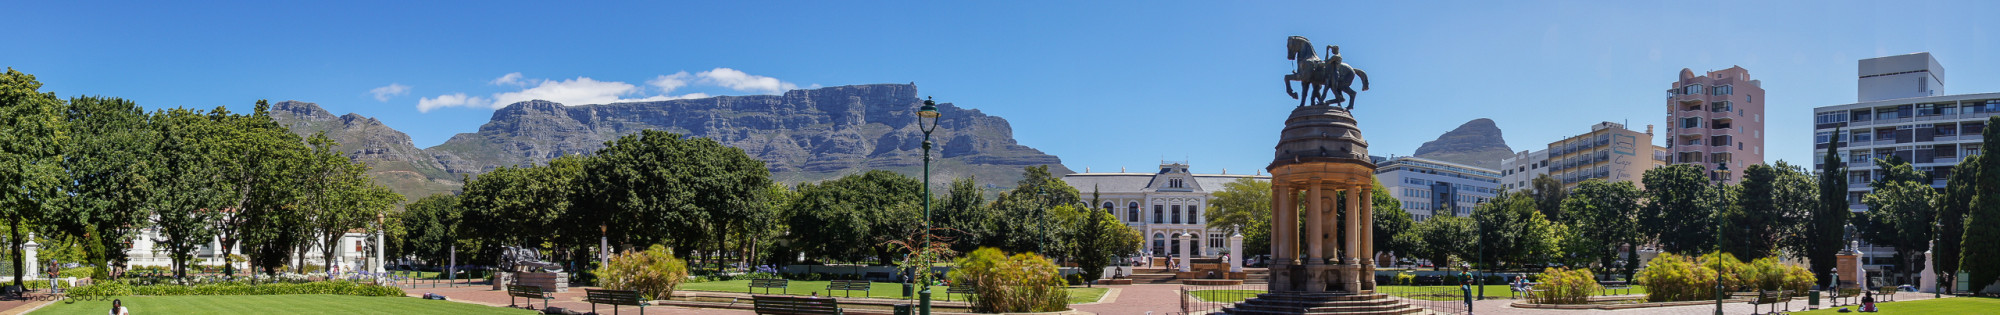 Cape Town - Gardens